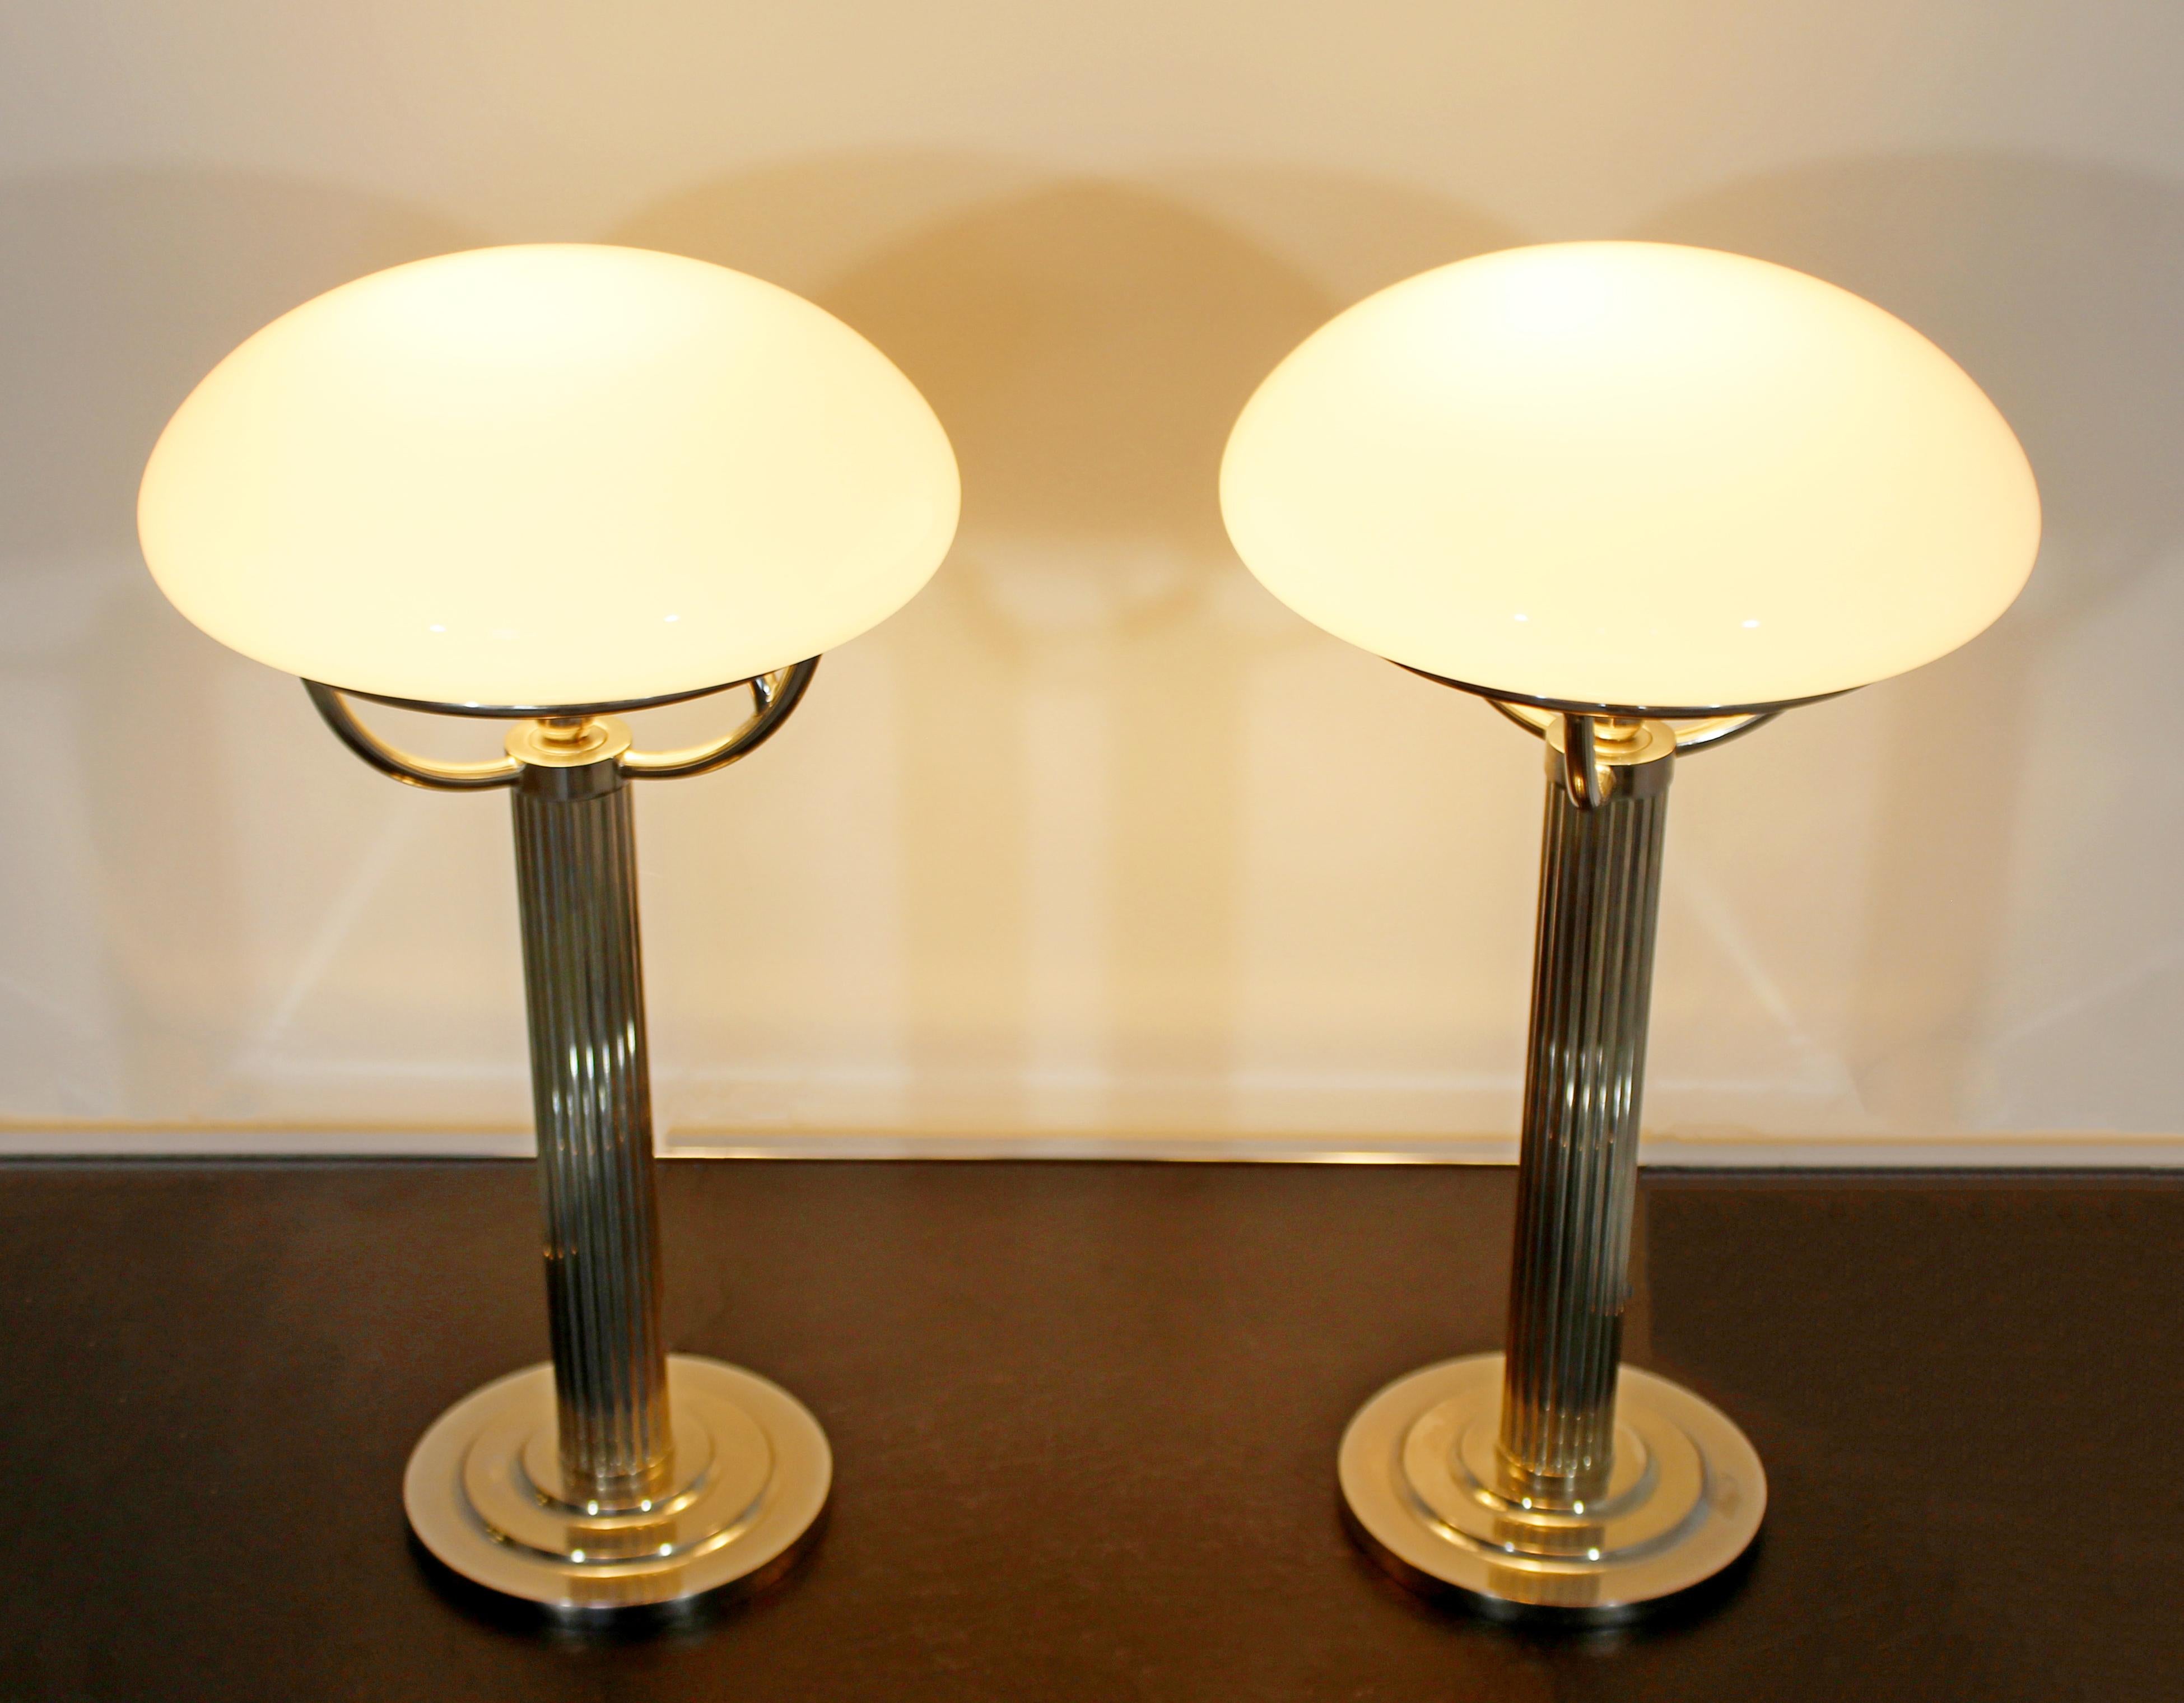 Austrian Art Deco Pair of Chrome & Glass Table Lamps, Adolf Loos, Early 20th Century 1910